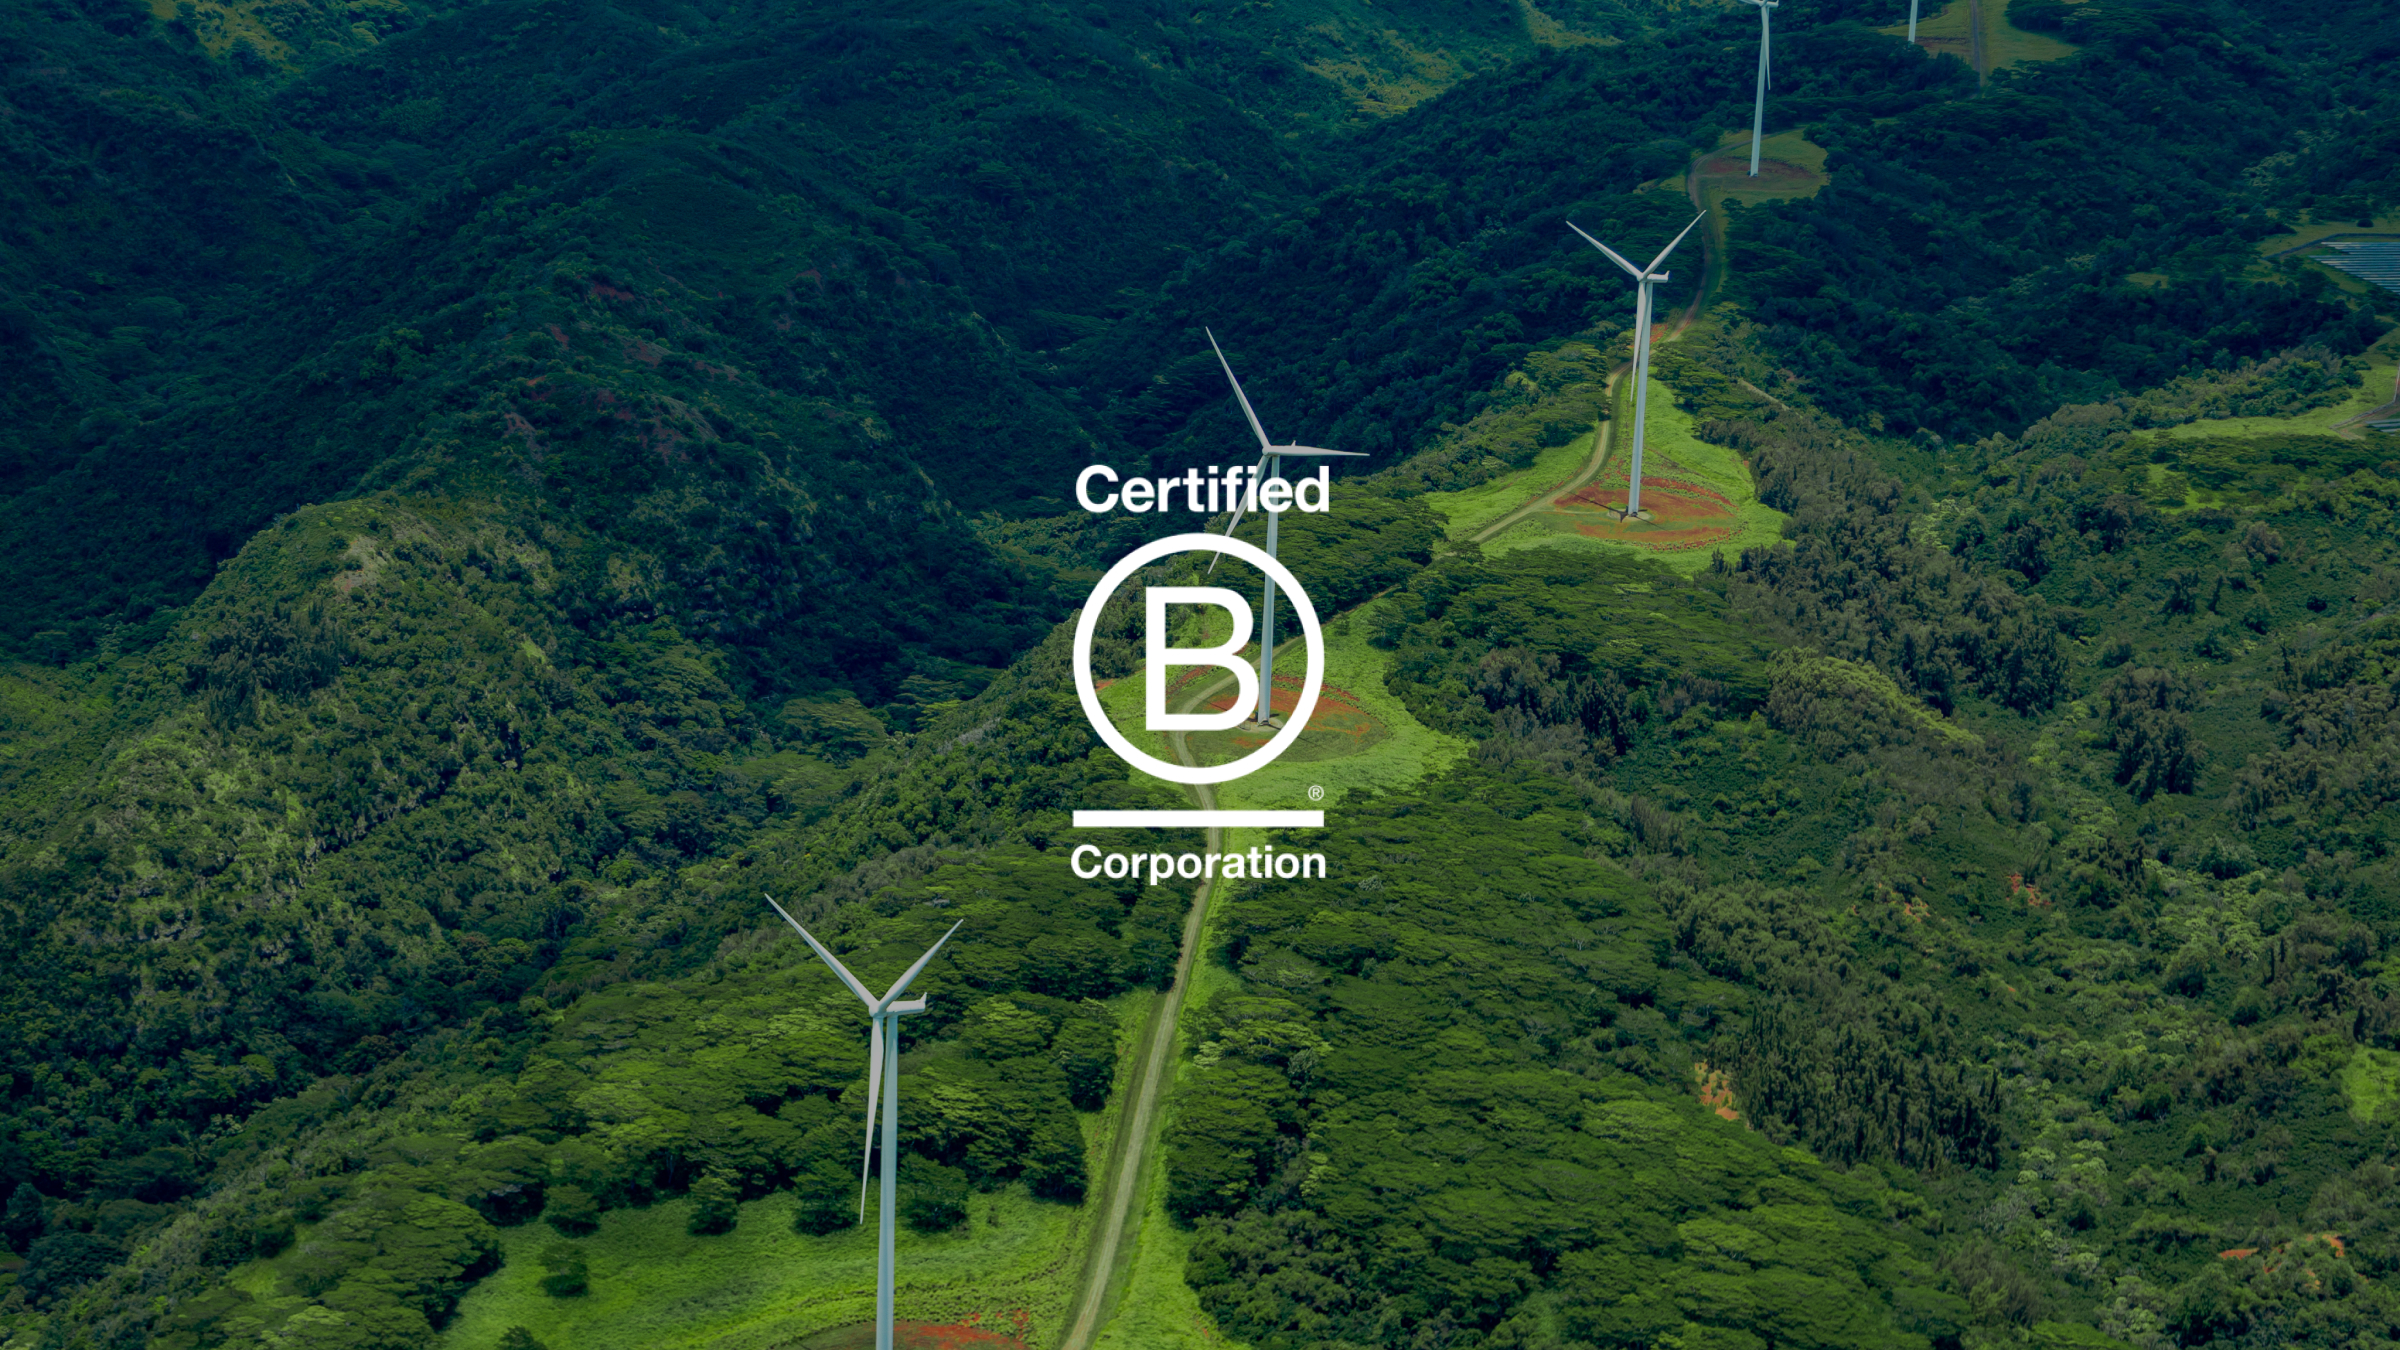 B Corp Corporate Sustainability